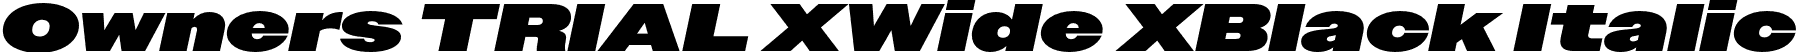 Owners TRIAL XWide XBlack Italic font - OwnersTRIALXWide-XBlackItalic.otf